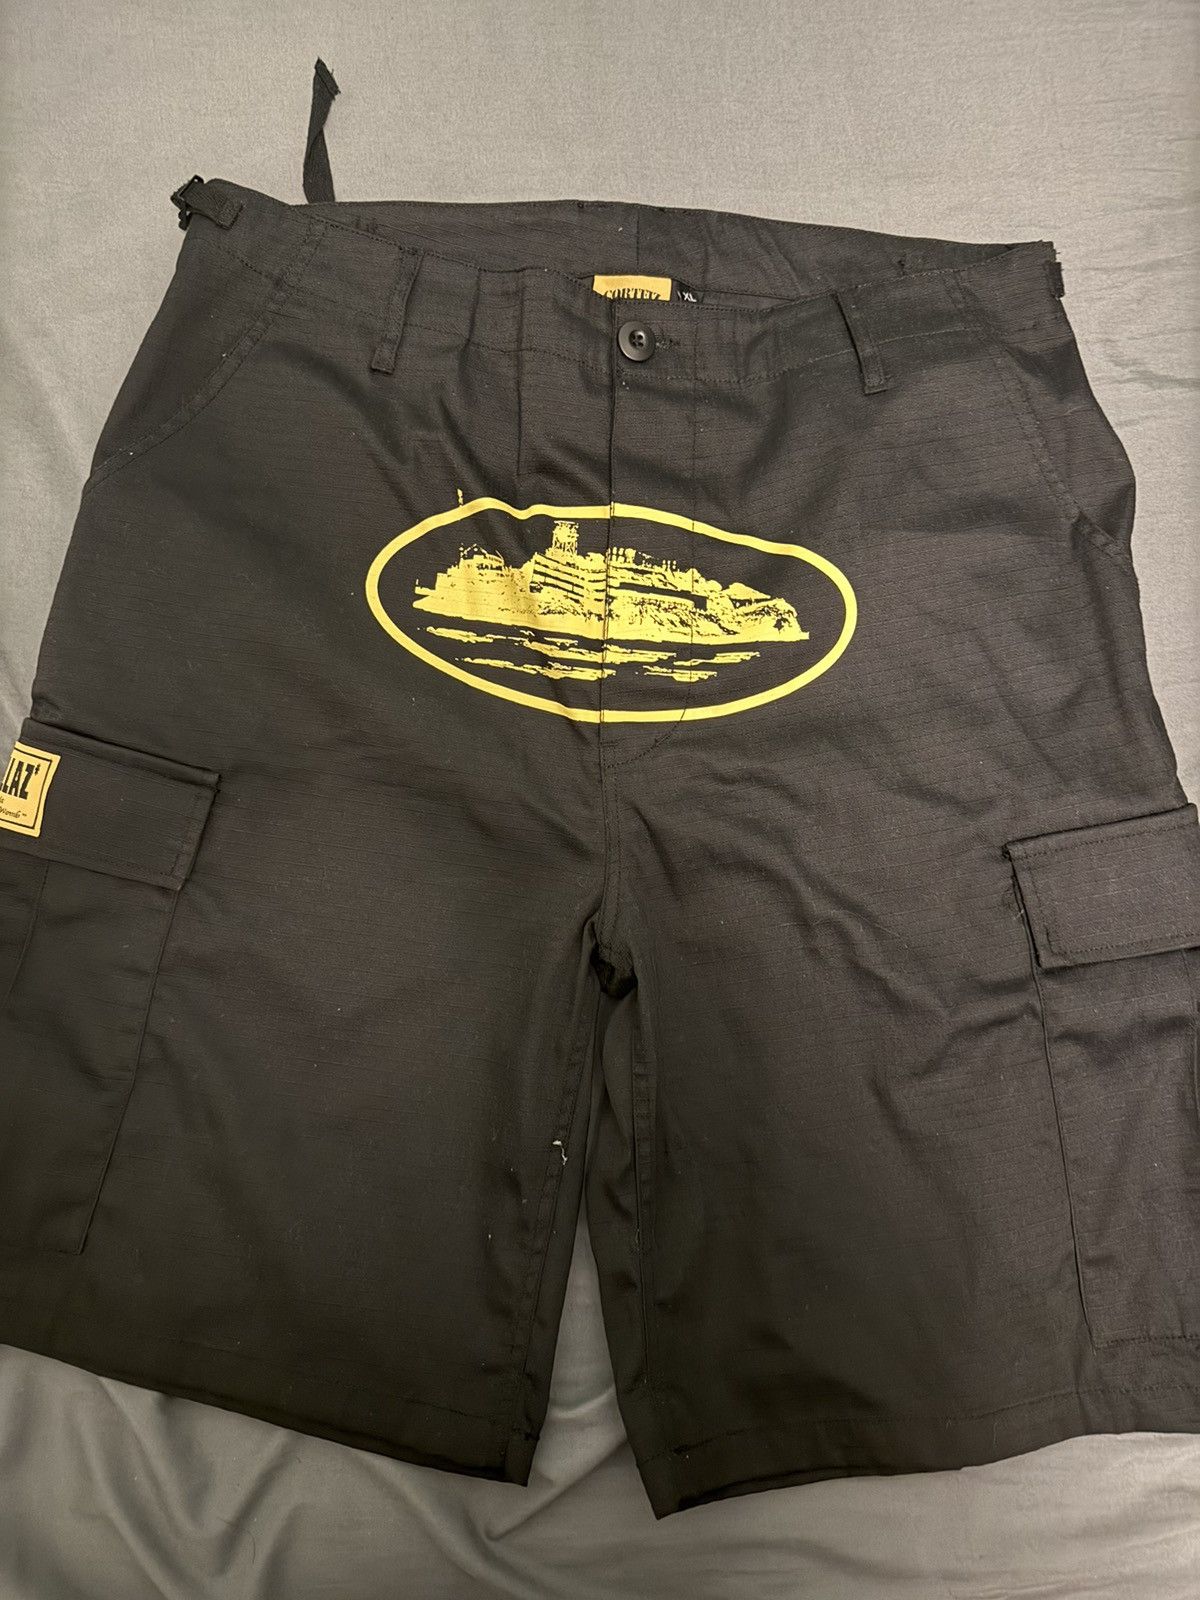 Corteiz Black and yellow cortiez shorts | Grailed